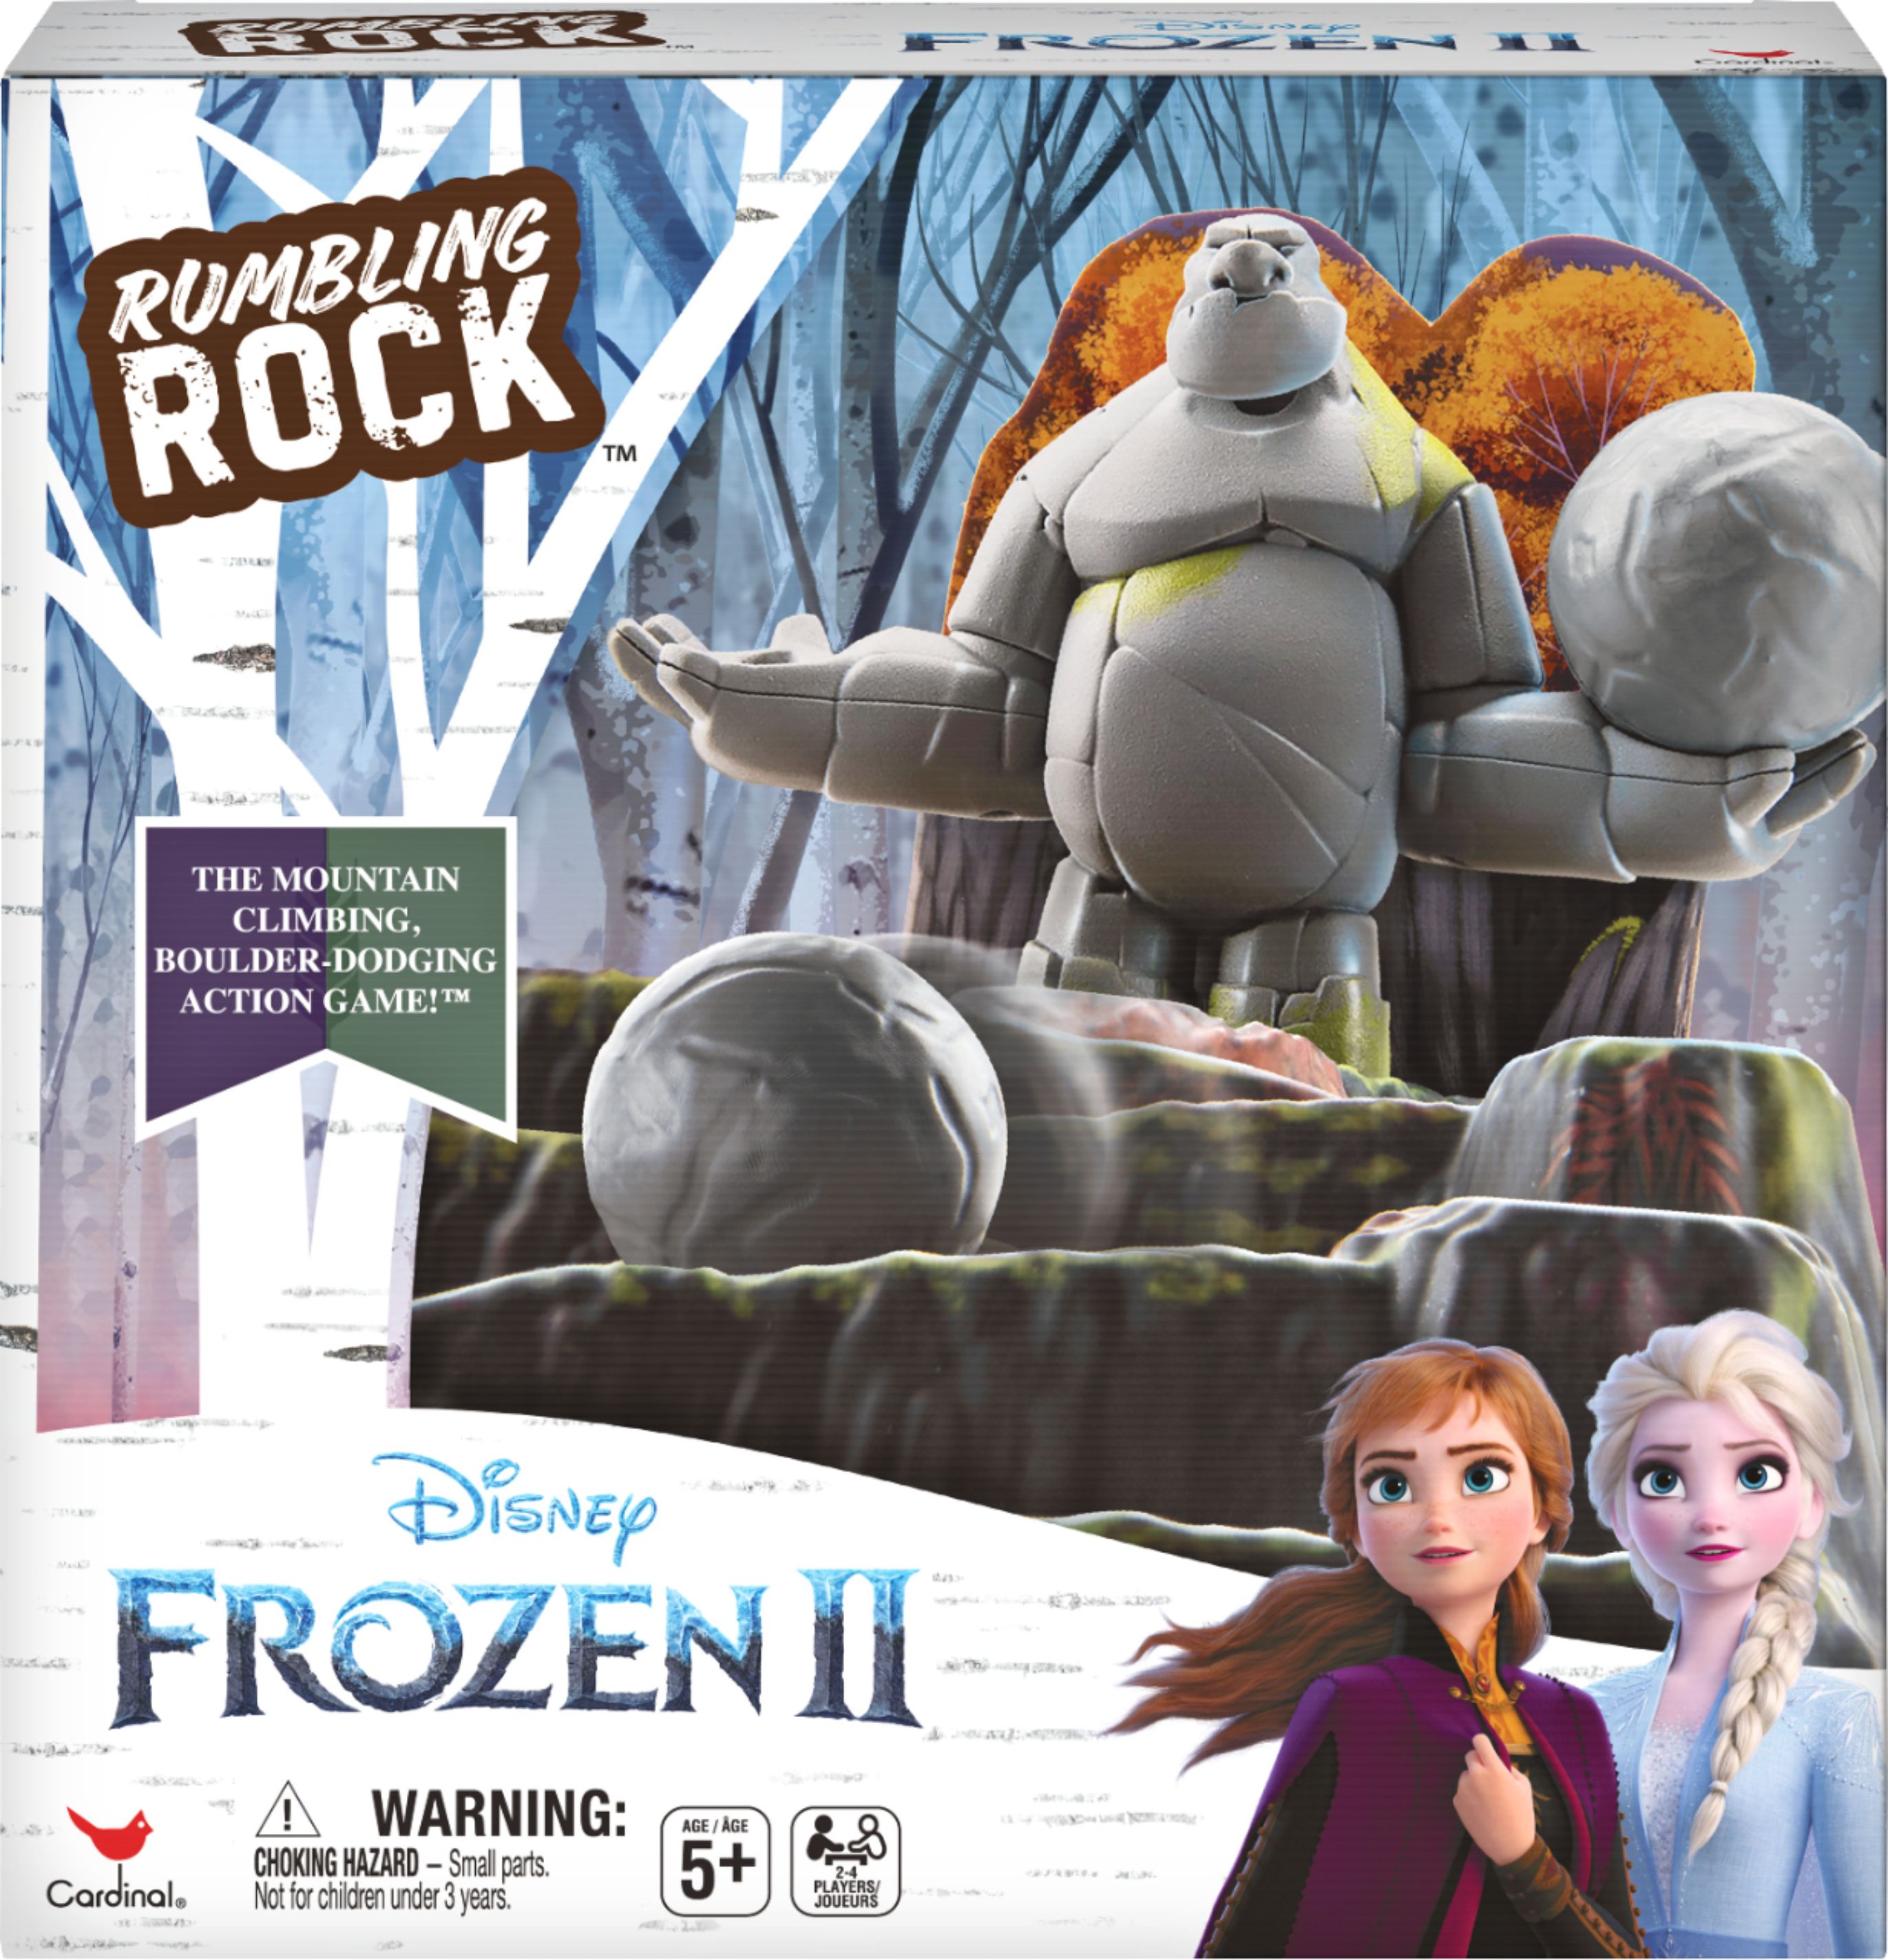 Spin Master - Frozen II Rumbling Rock Board Game